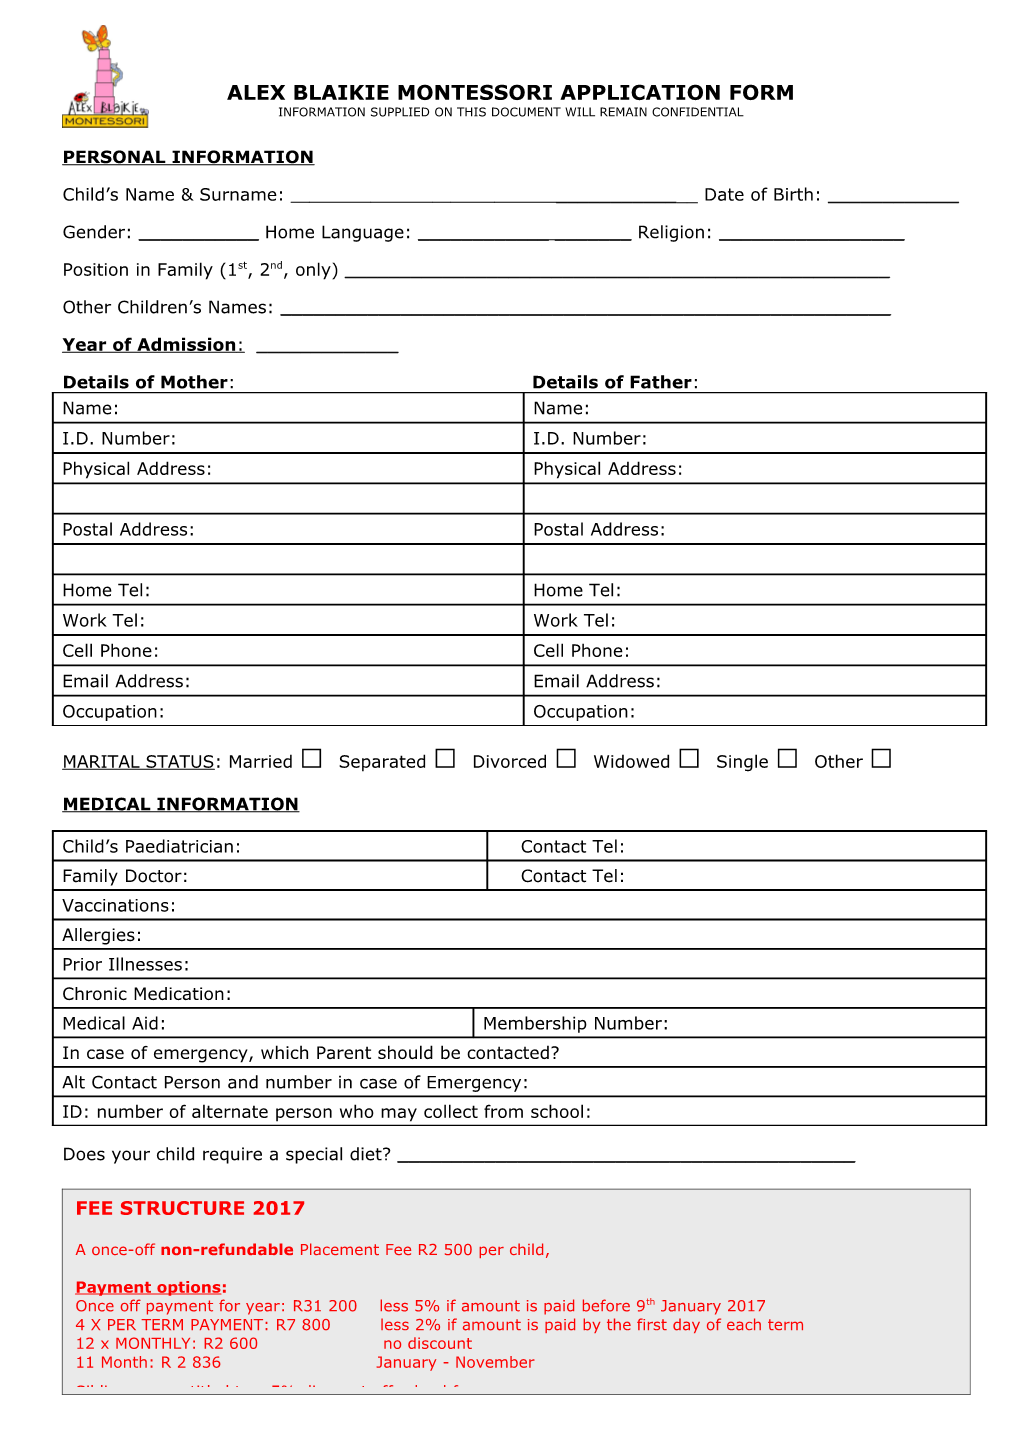 Alex Blaikie Montessori 2005 Registration Form